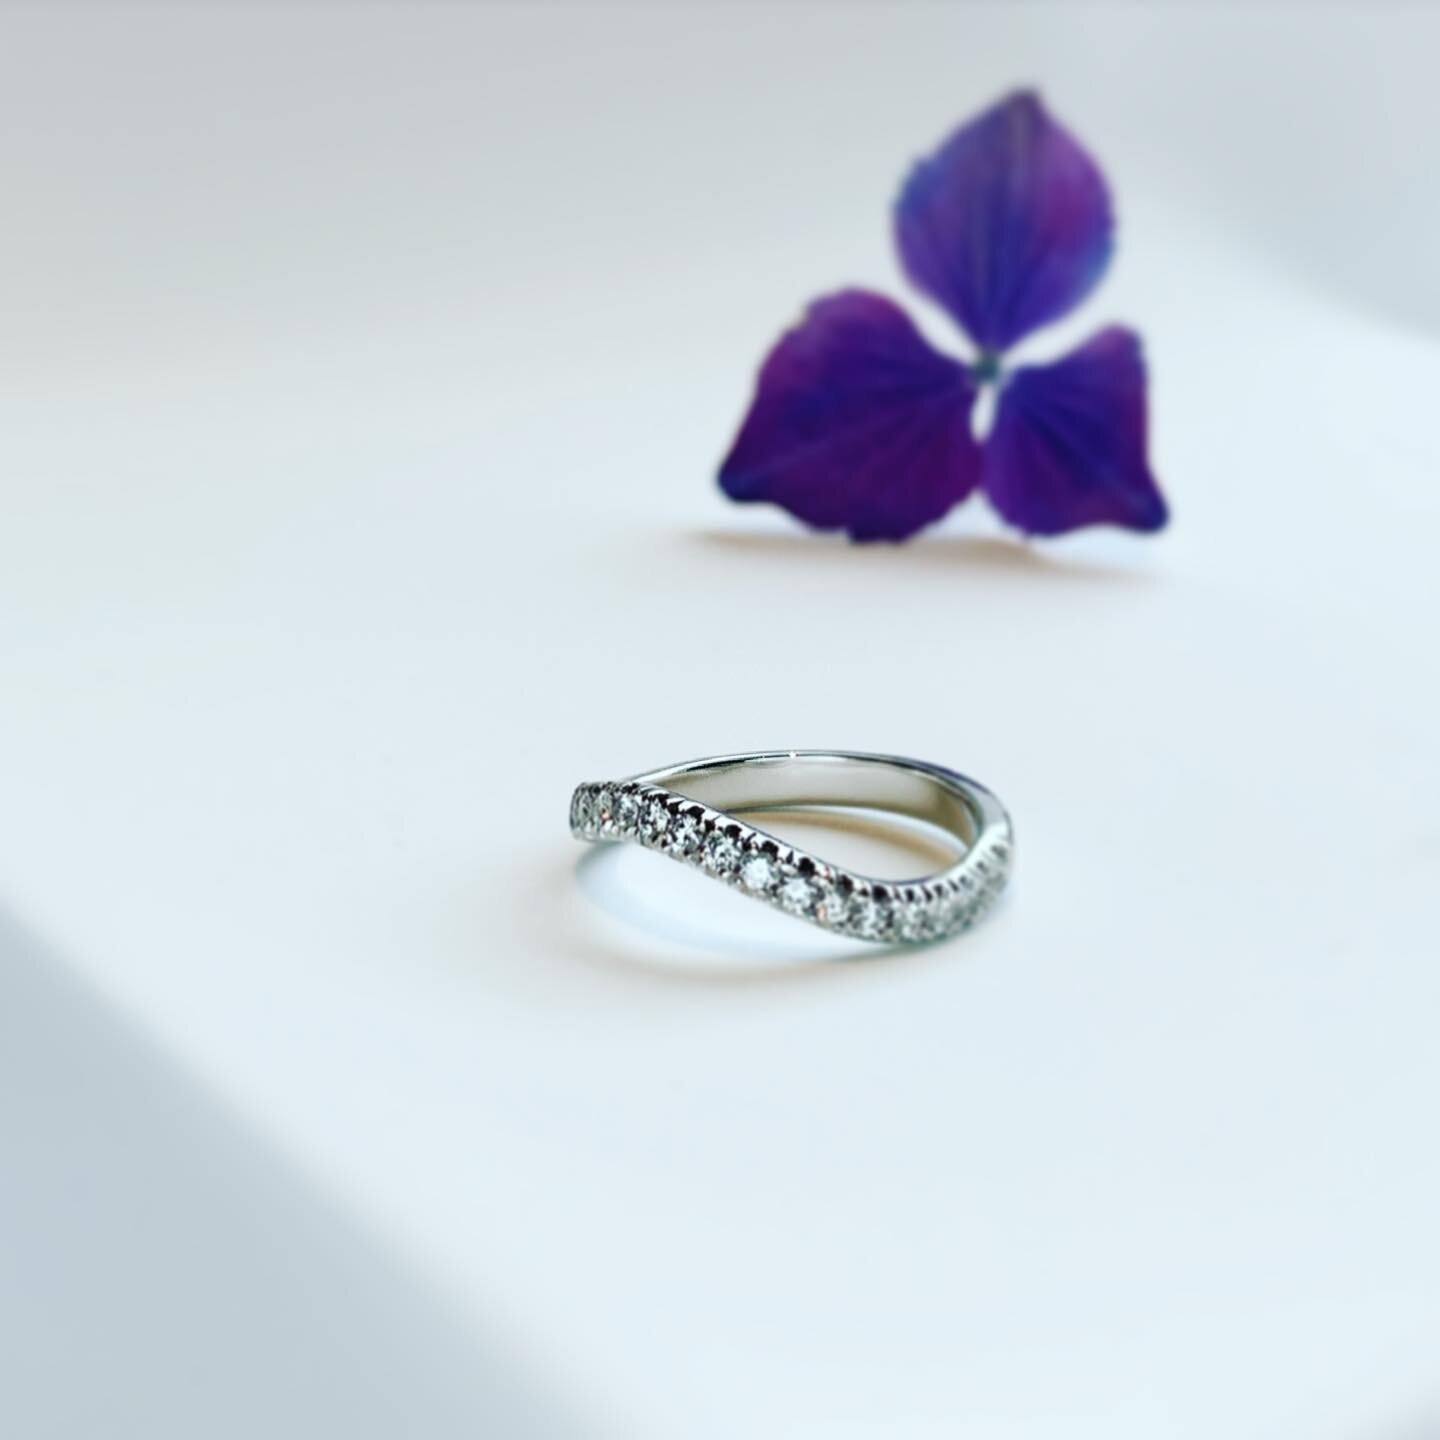 Friday bling-ring! 💎🌟
Bye bye beauty!

#guldmakeriet #blingring #castell #custommade #friday #handmadefinejewelry #finejewelry #alliansring #best&auml;llning #fredag